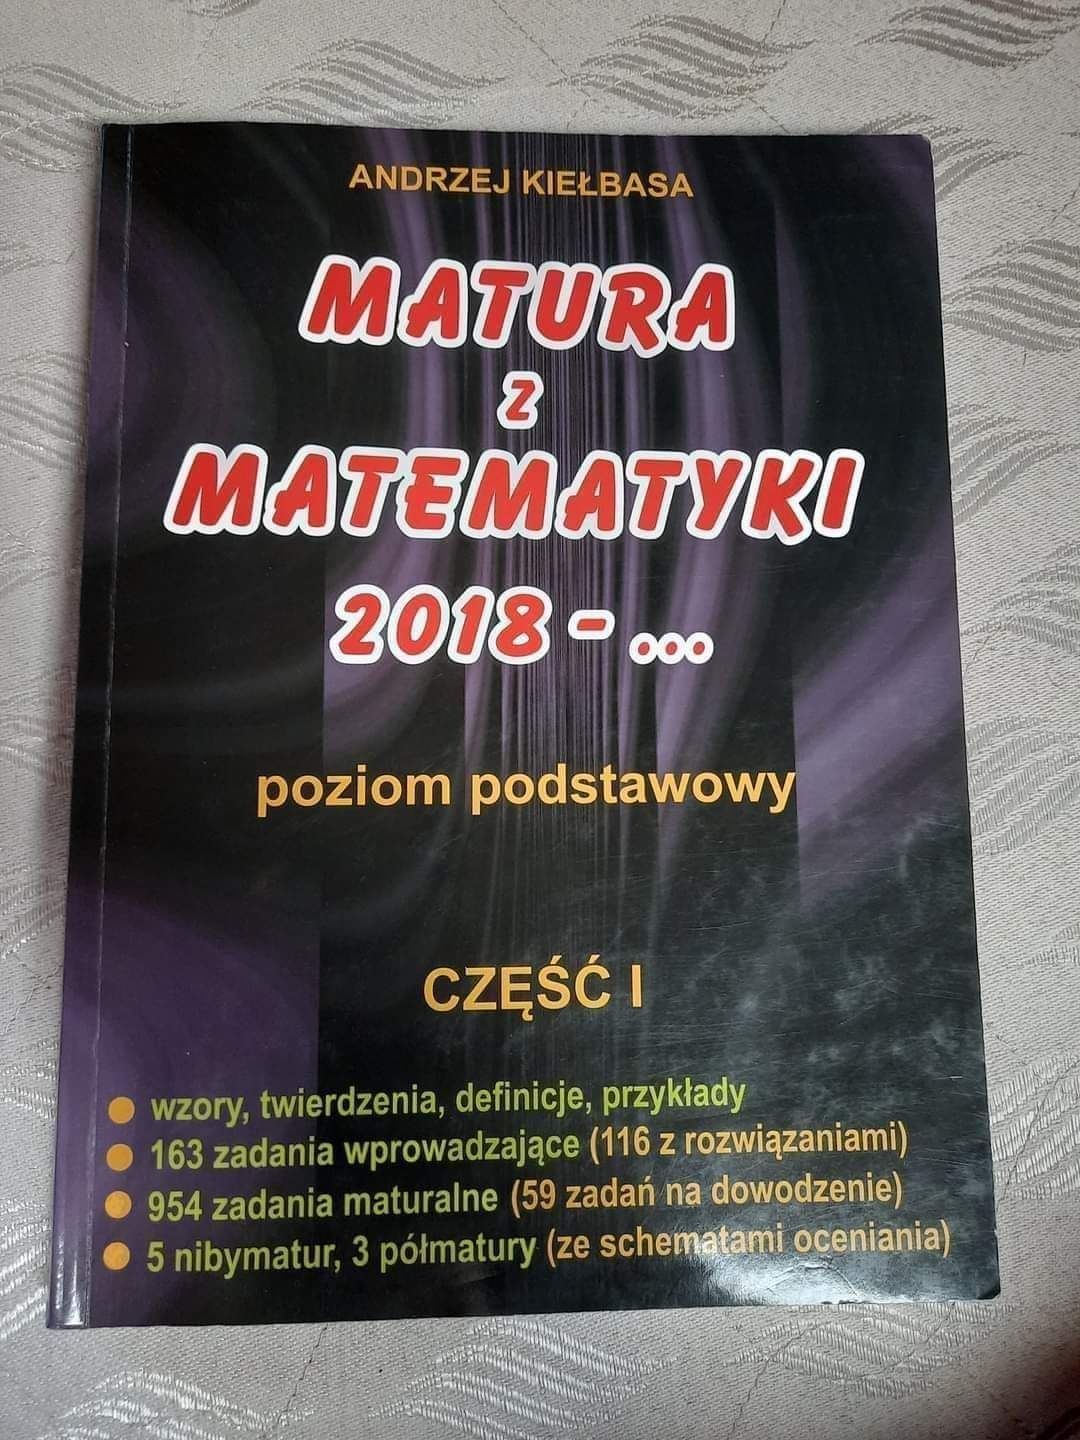 Książka "Matura z matematyki" A. Kiełbasa